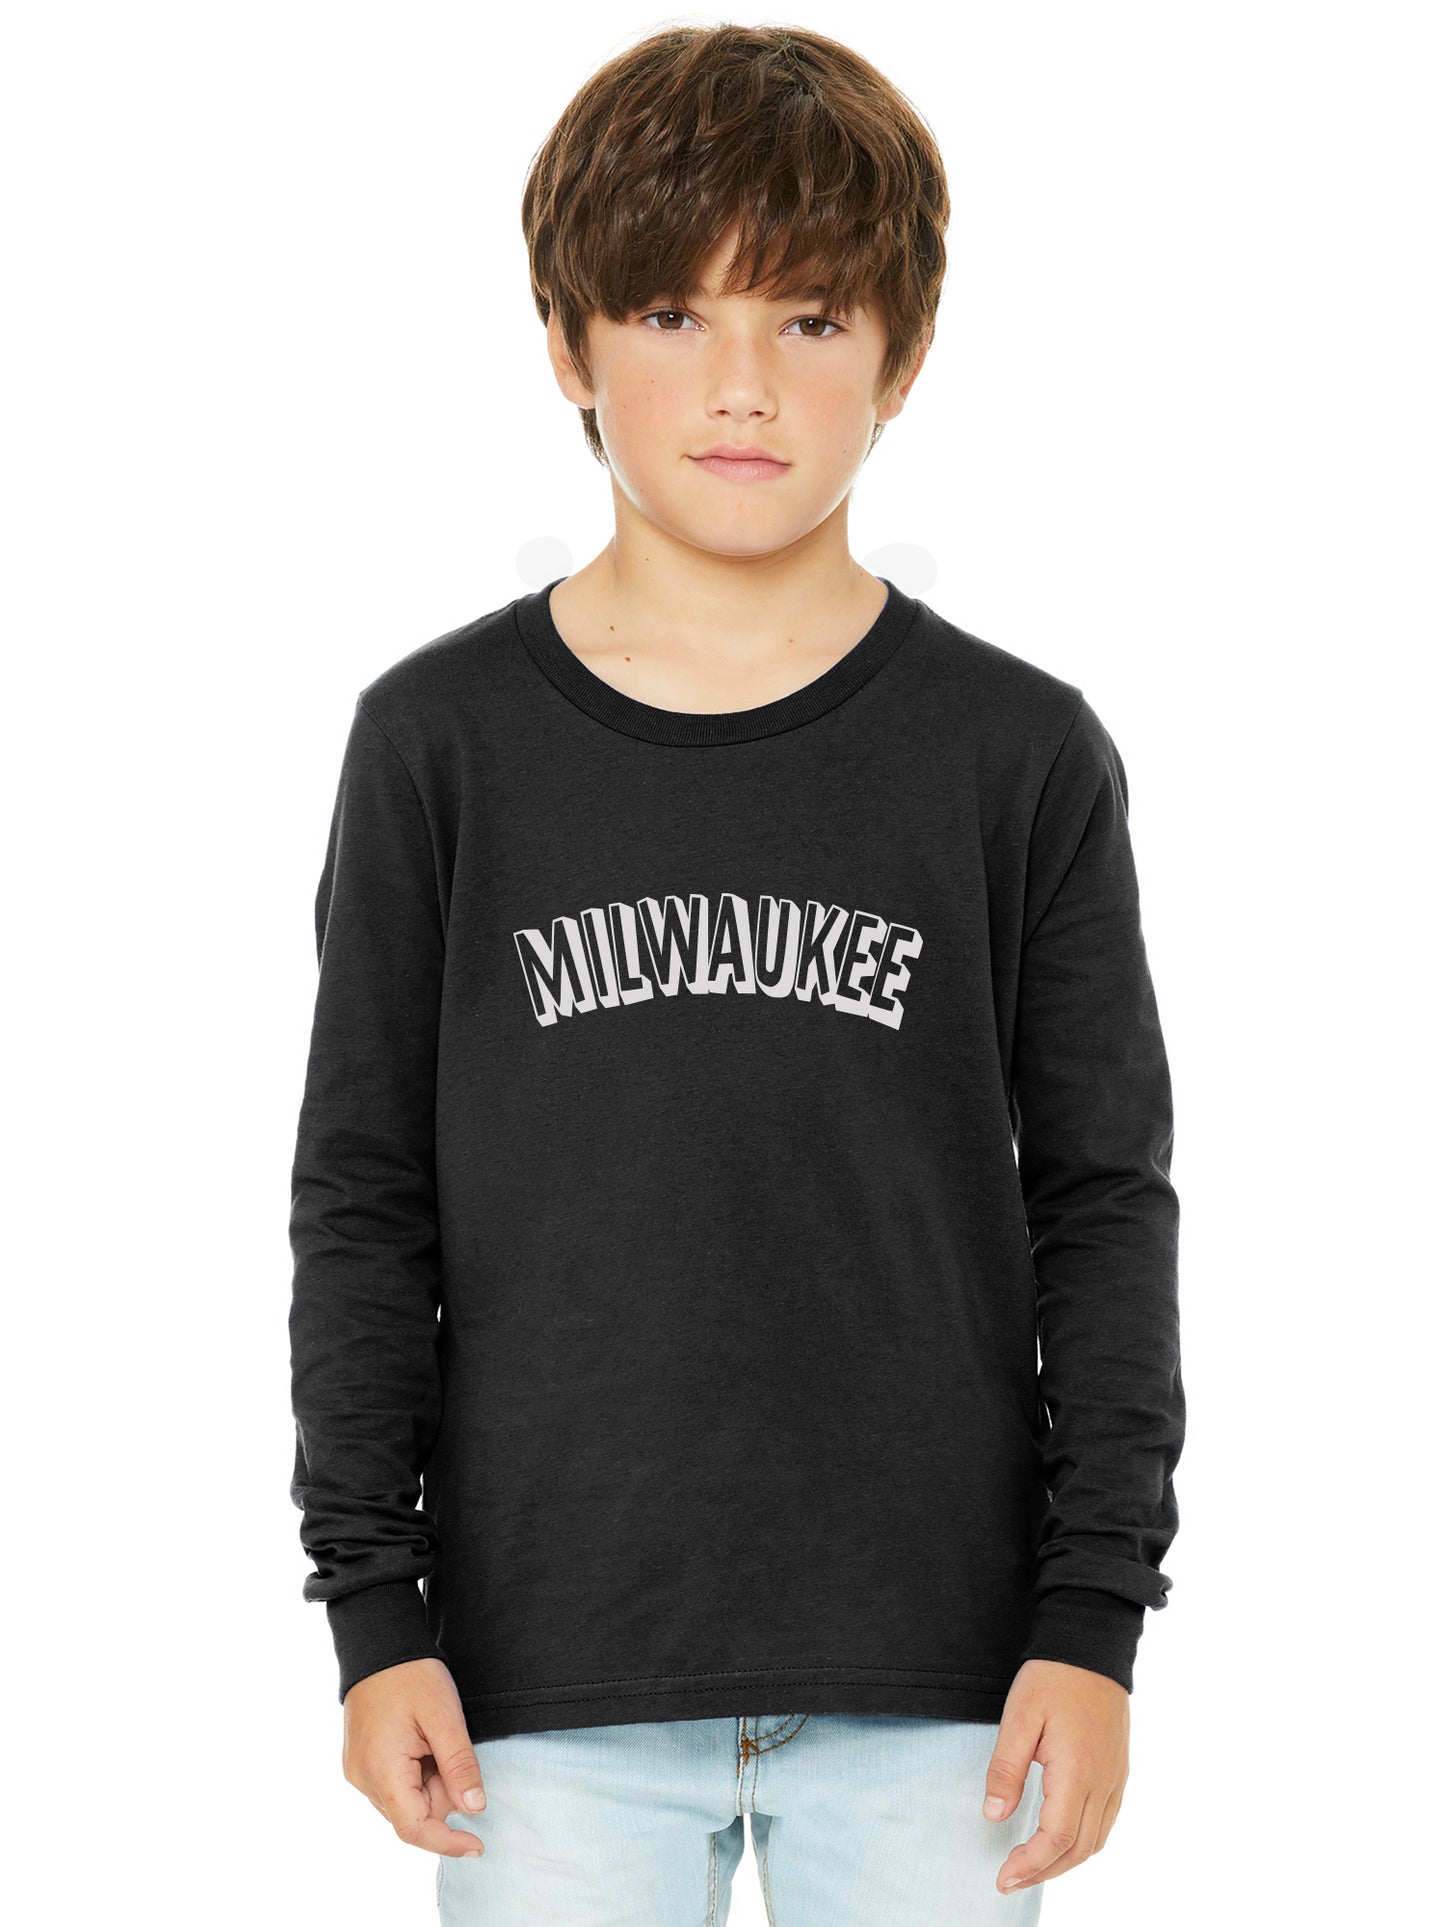 Daxton Youth Long Sleeve Milwaukee Basic Tshirt